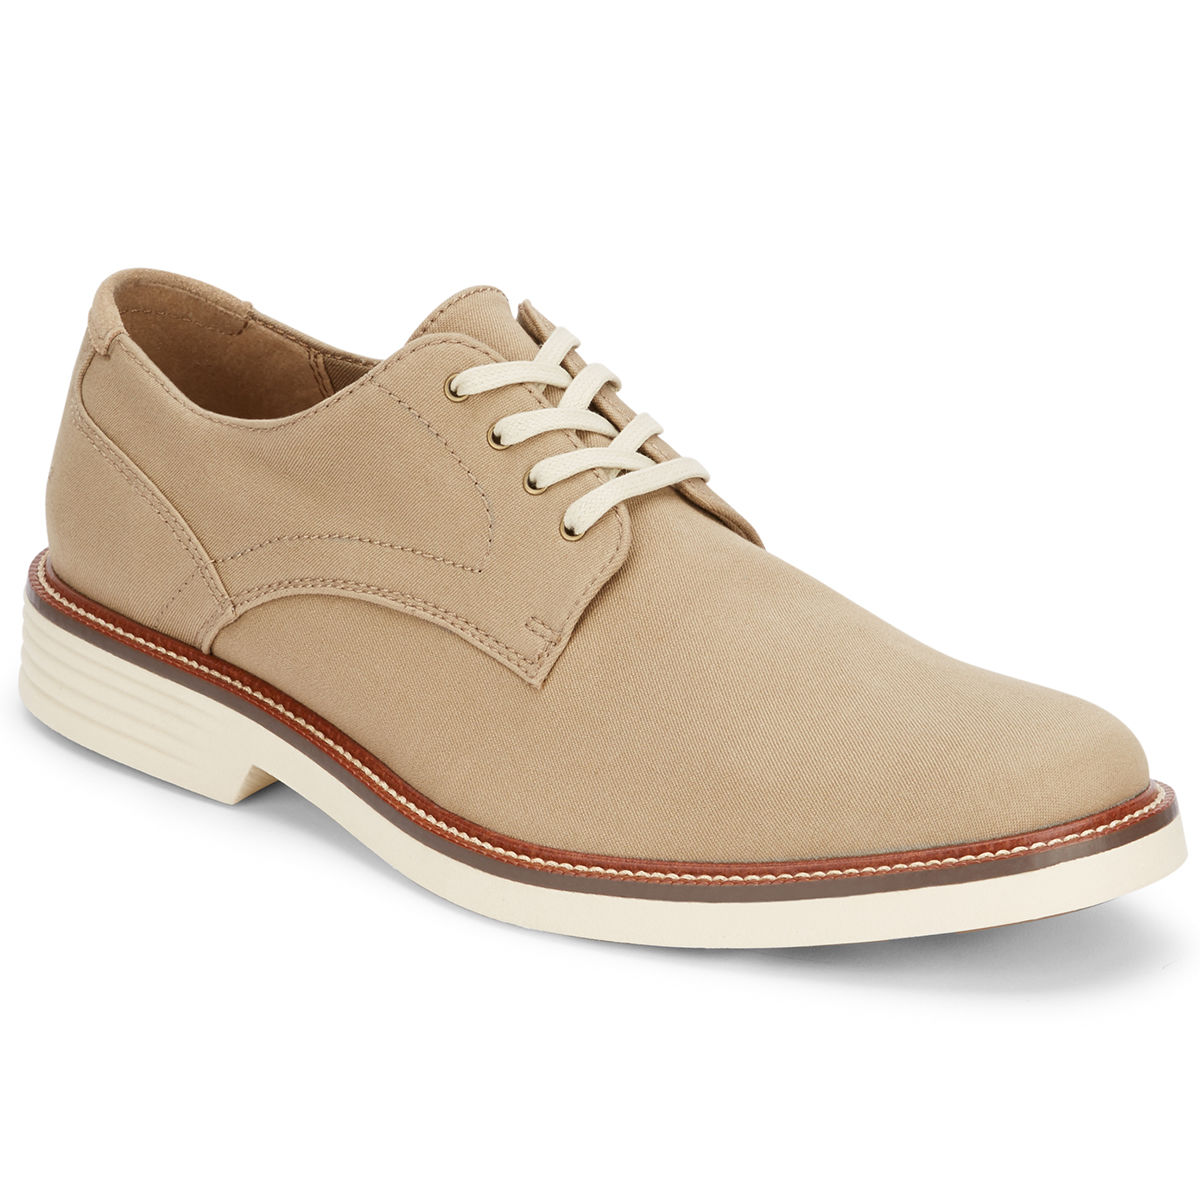 Dockers Men's Parkway Plain Toe Oxford Shoes - White, 9.5